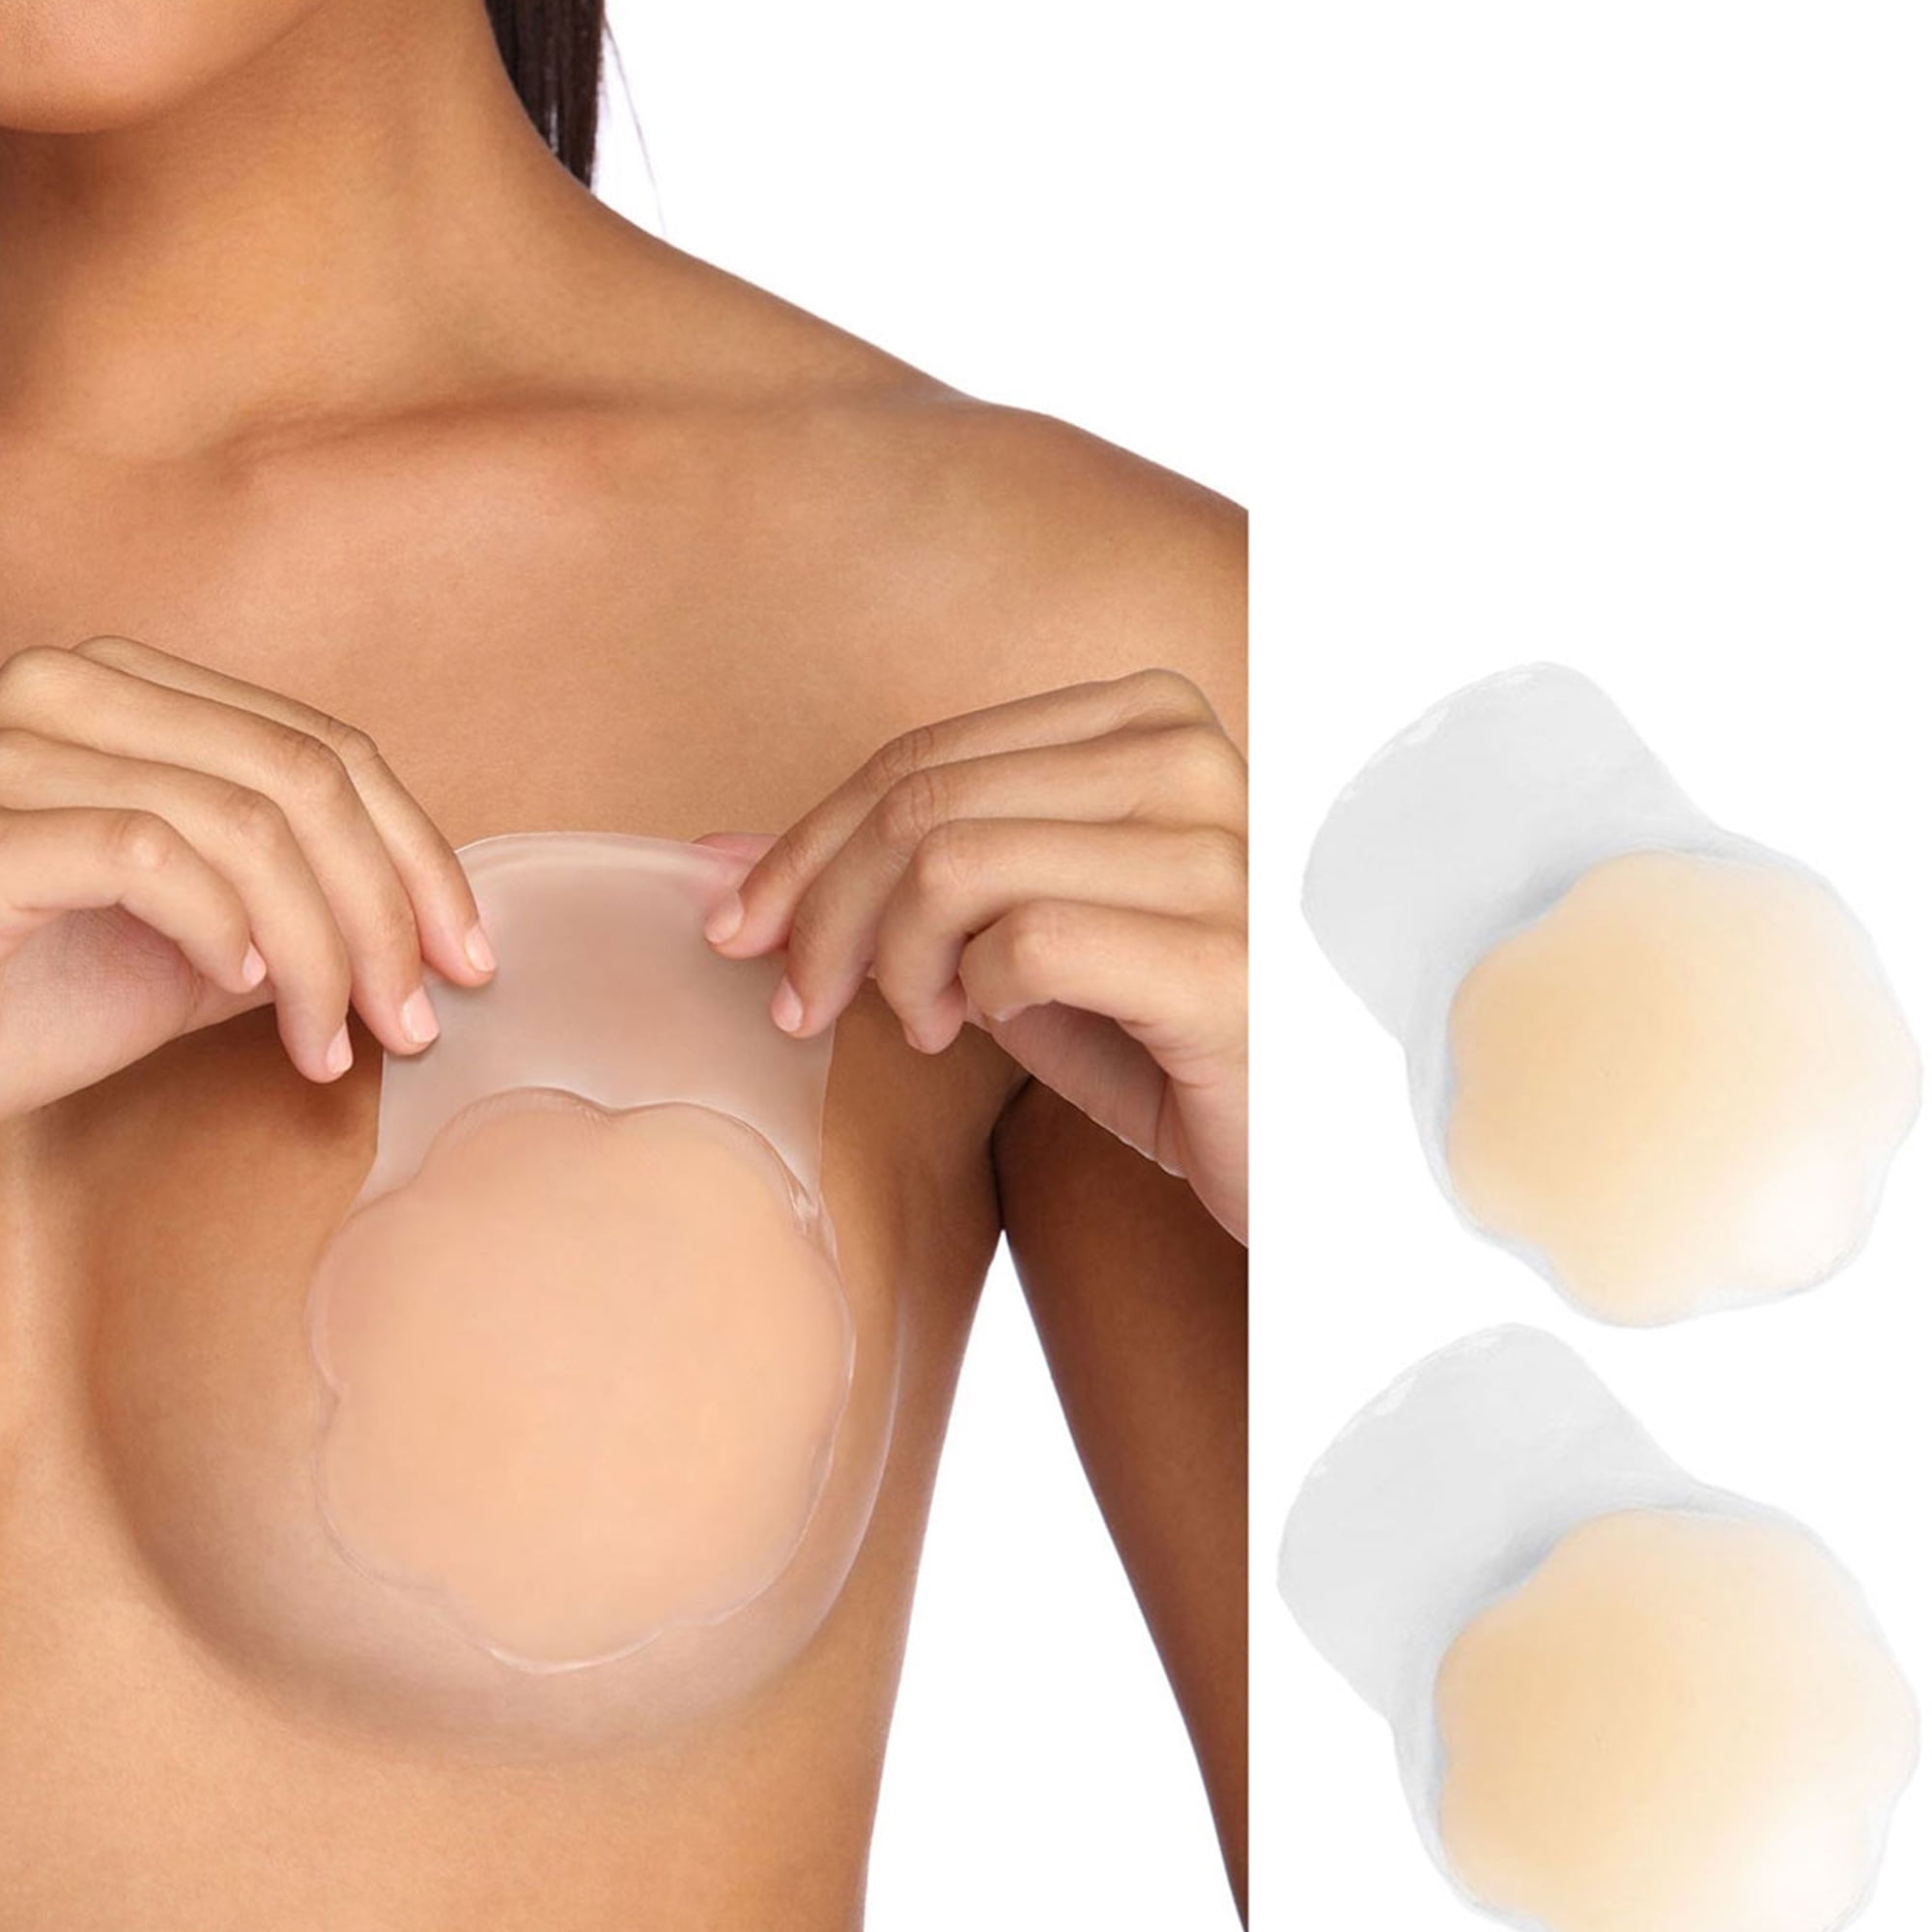 Xysaqa Women's Sticky Bra for Breast Lift, Push up Reusable